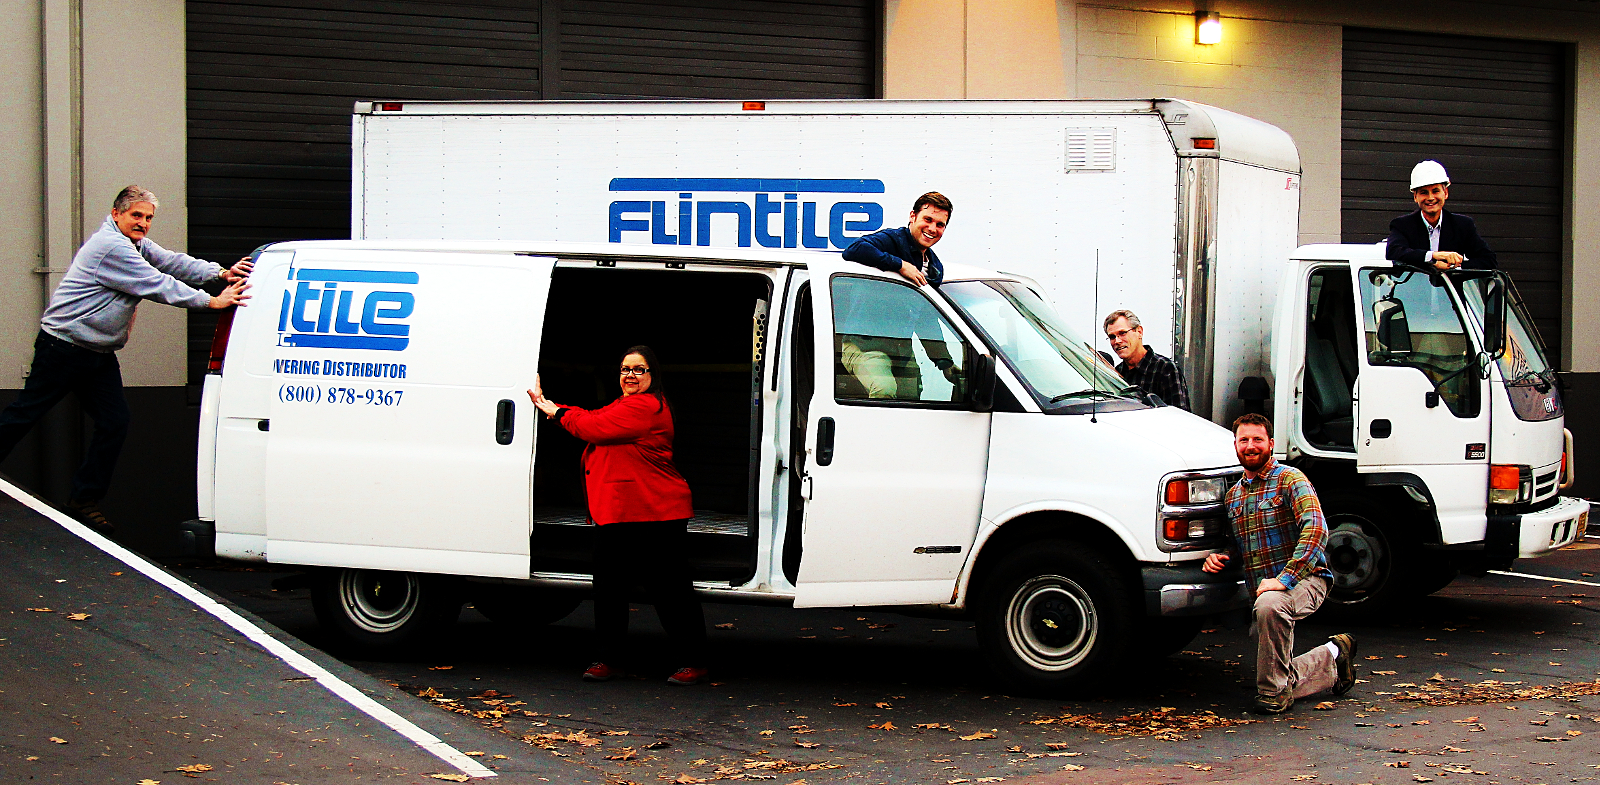 The Flintile Inc team playfully horsing around the work vans